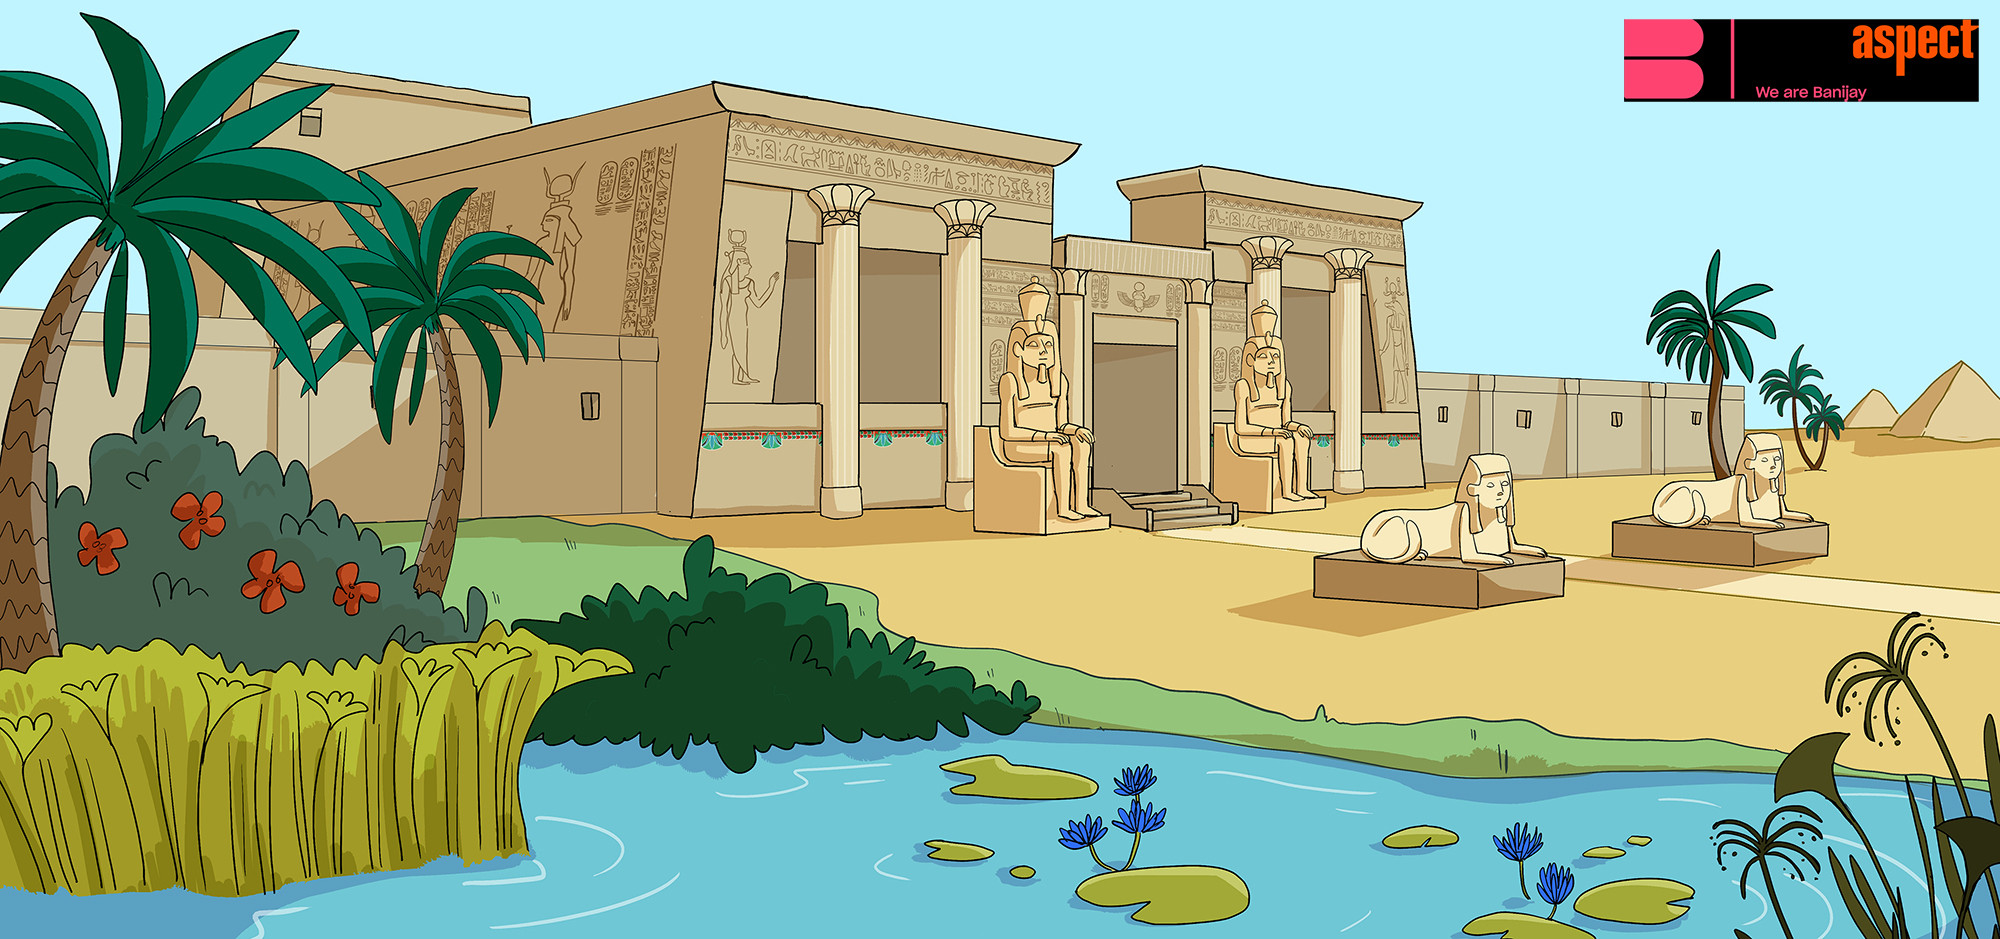 Cleopatra episode
EXT Egyptian Palace 